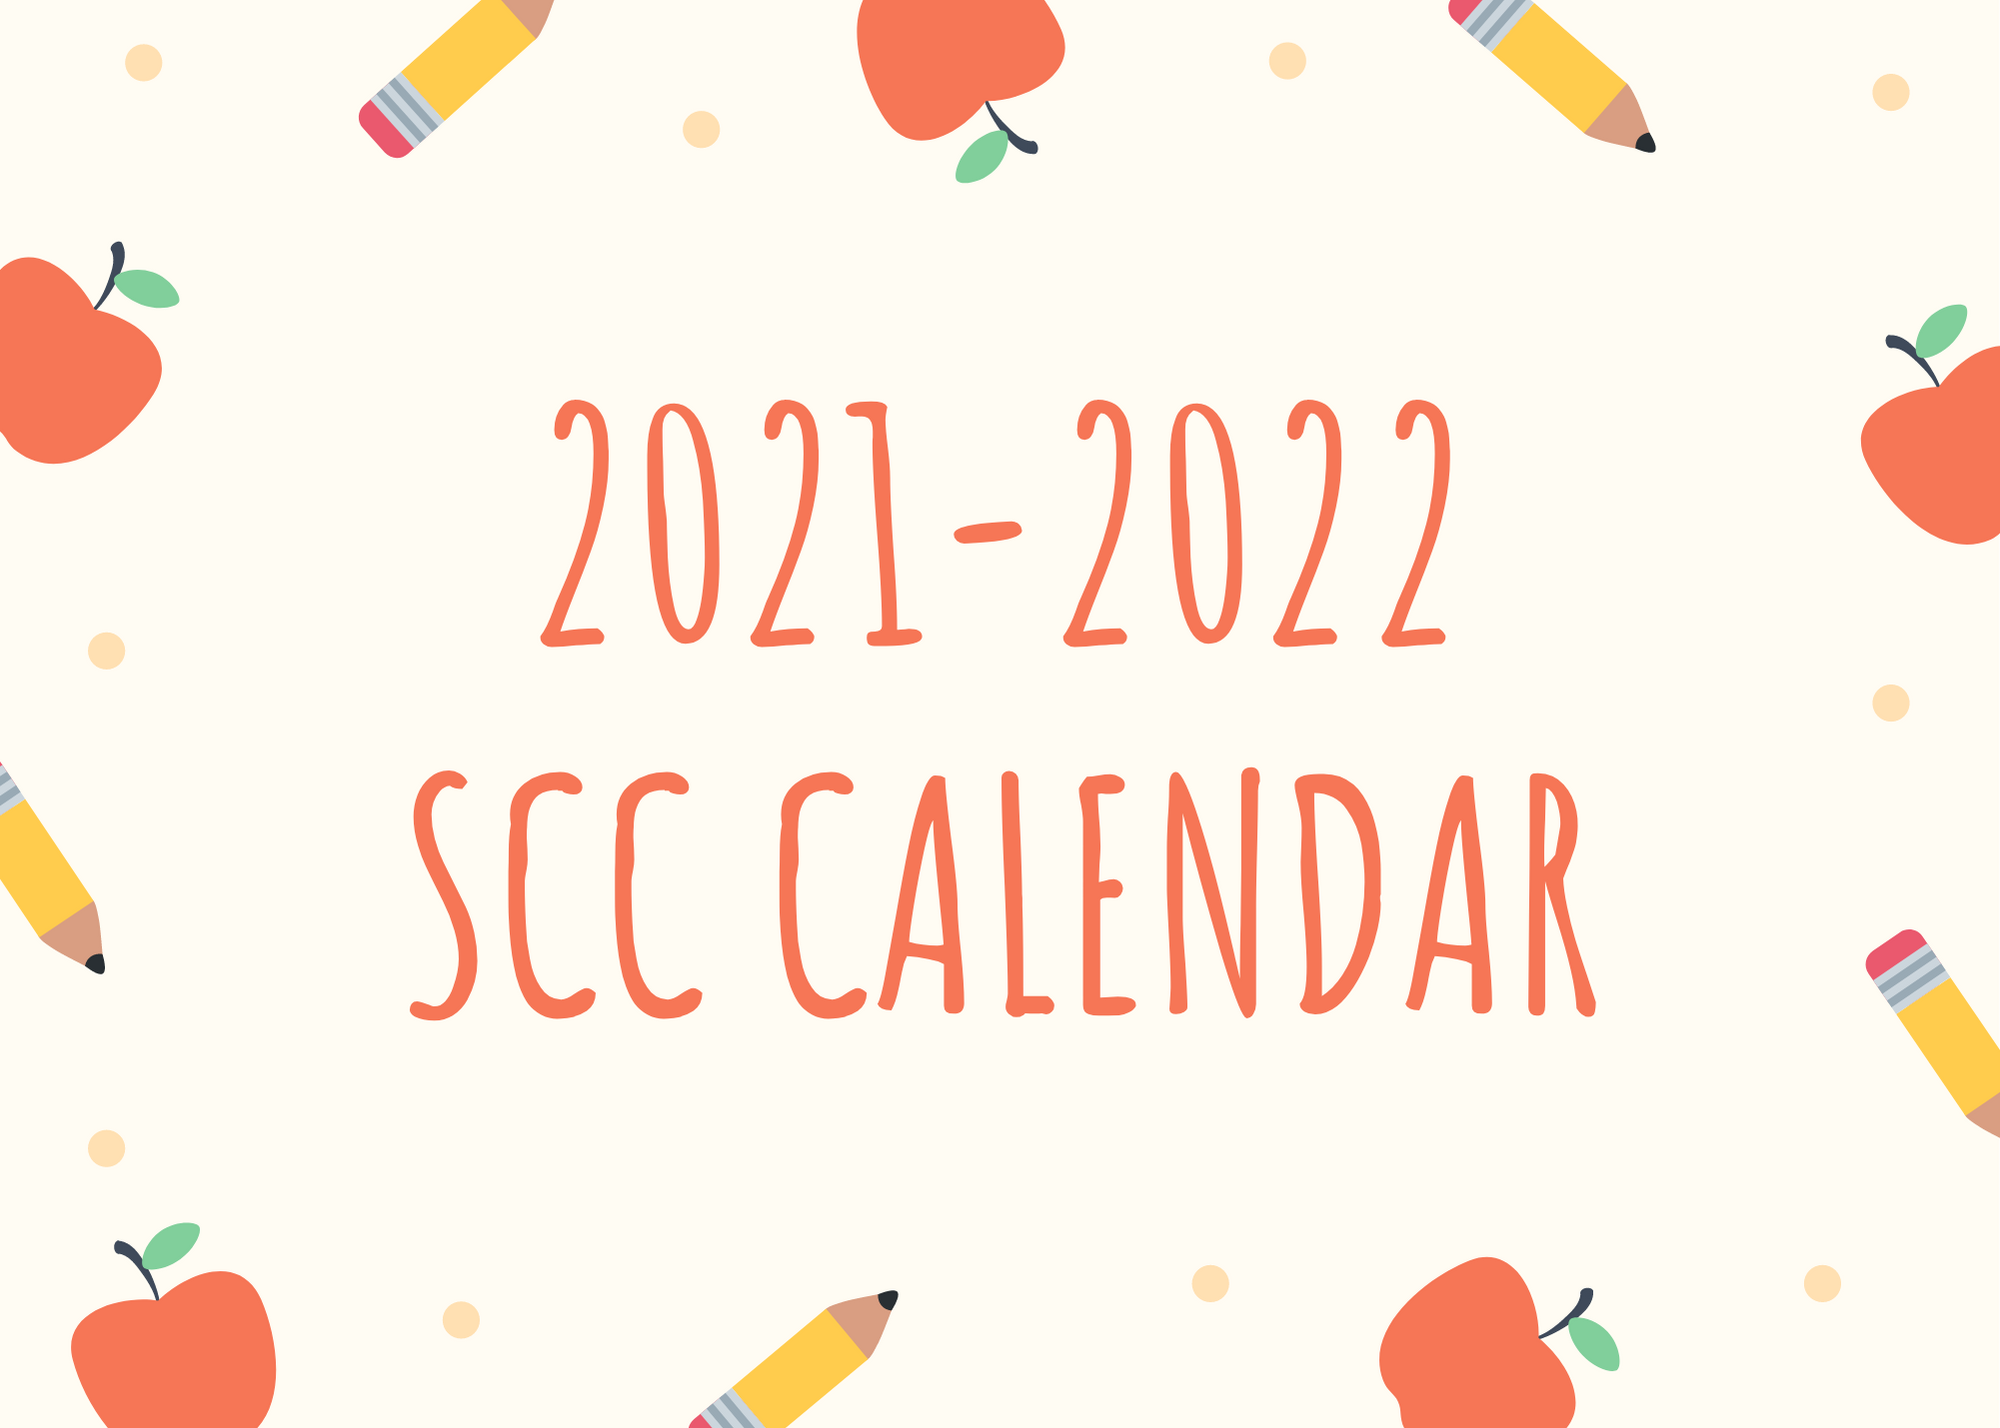 2021-2022 School Community Council Calendar